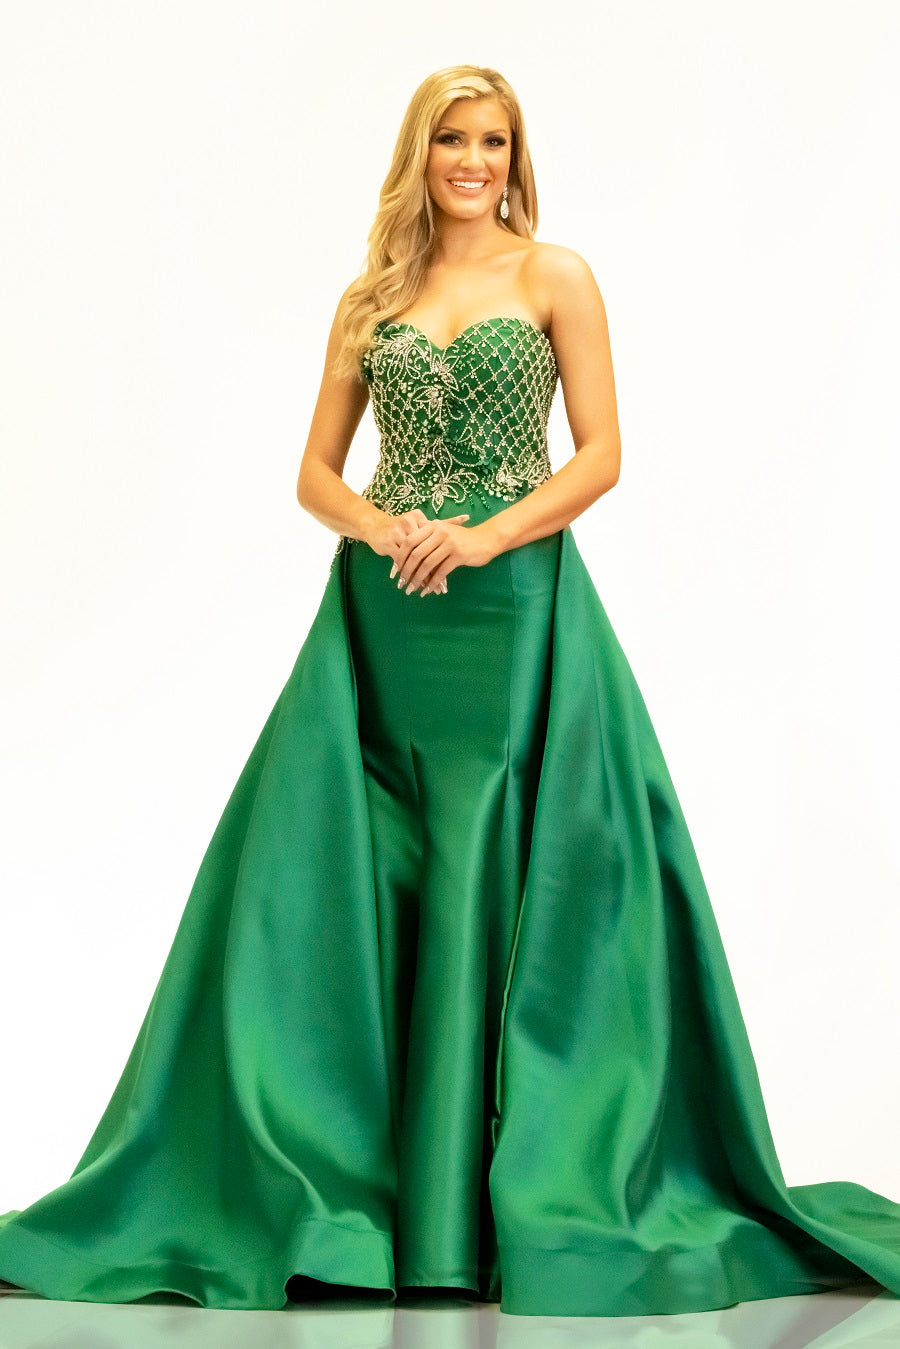 Johnathan-Kayne-2333-emerald-green-pageant-dress-front-sweetheart-neckline-strapless-embellished-bodice-mermaid-overskirt